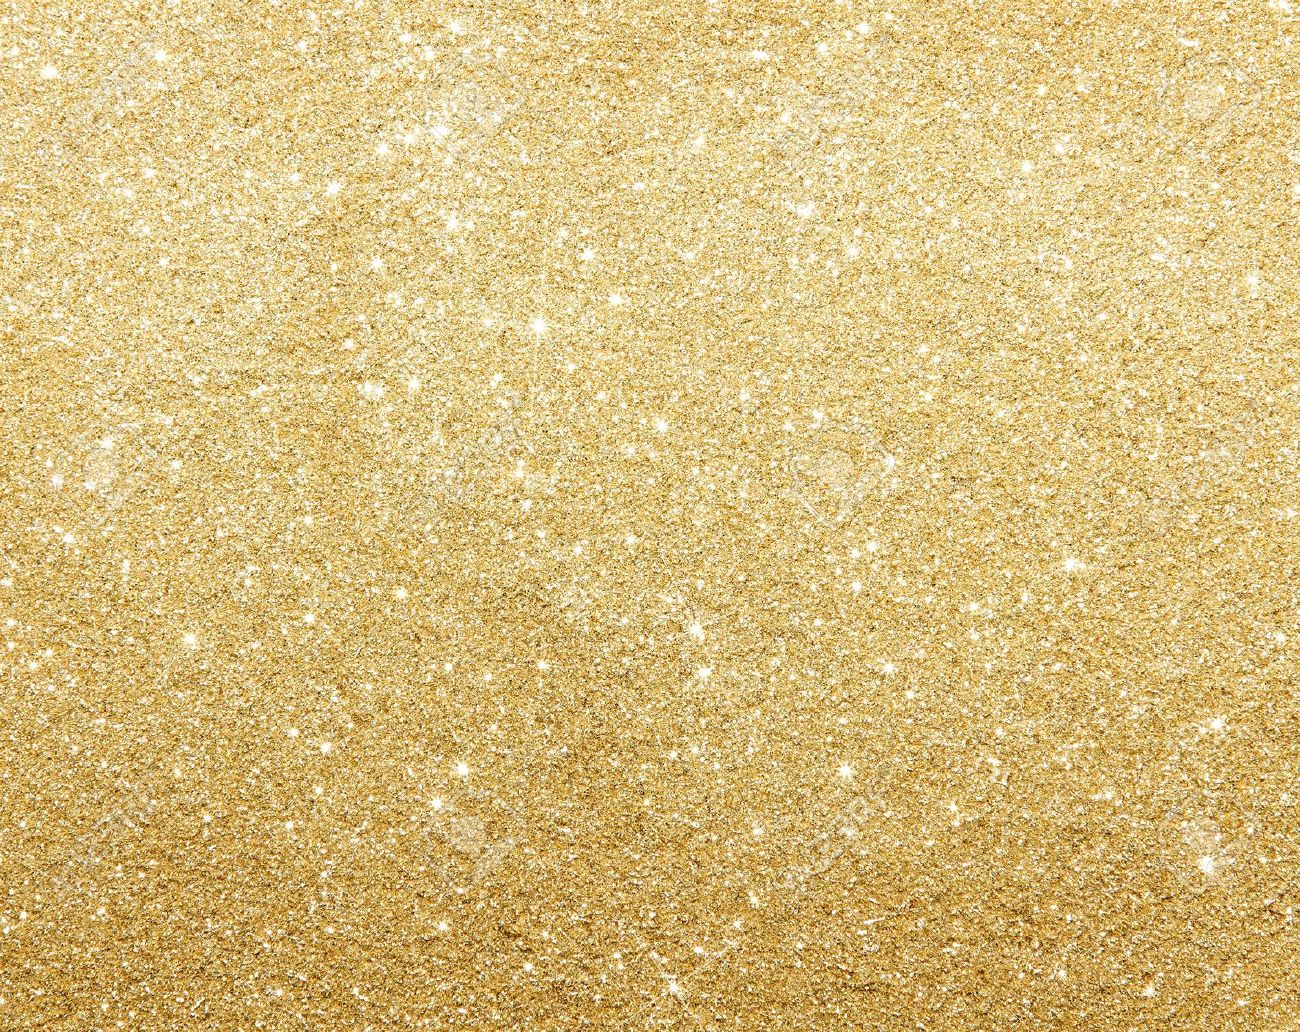 Gold Glitter Textures The Art Mad Wallpaper